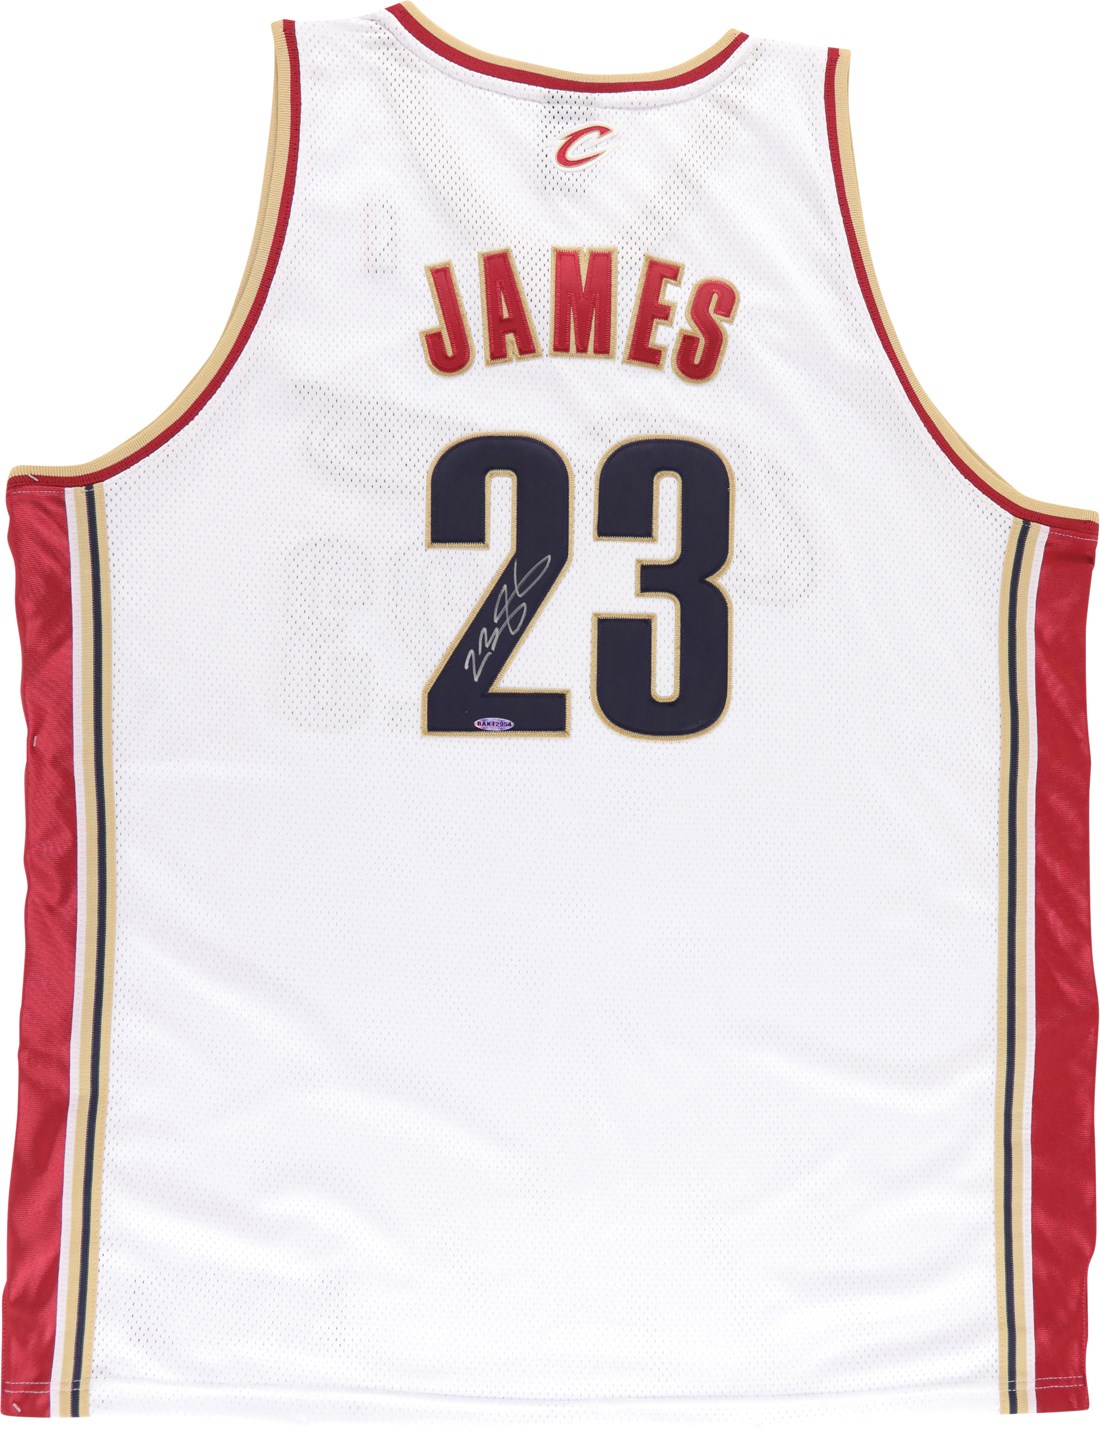 - 2003 LeBron James Signed Cleveland Cavaliers Jersey (UDA)